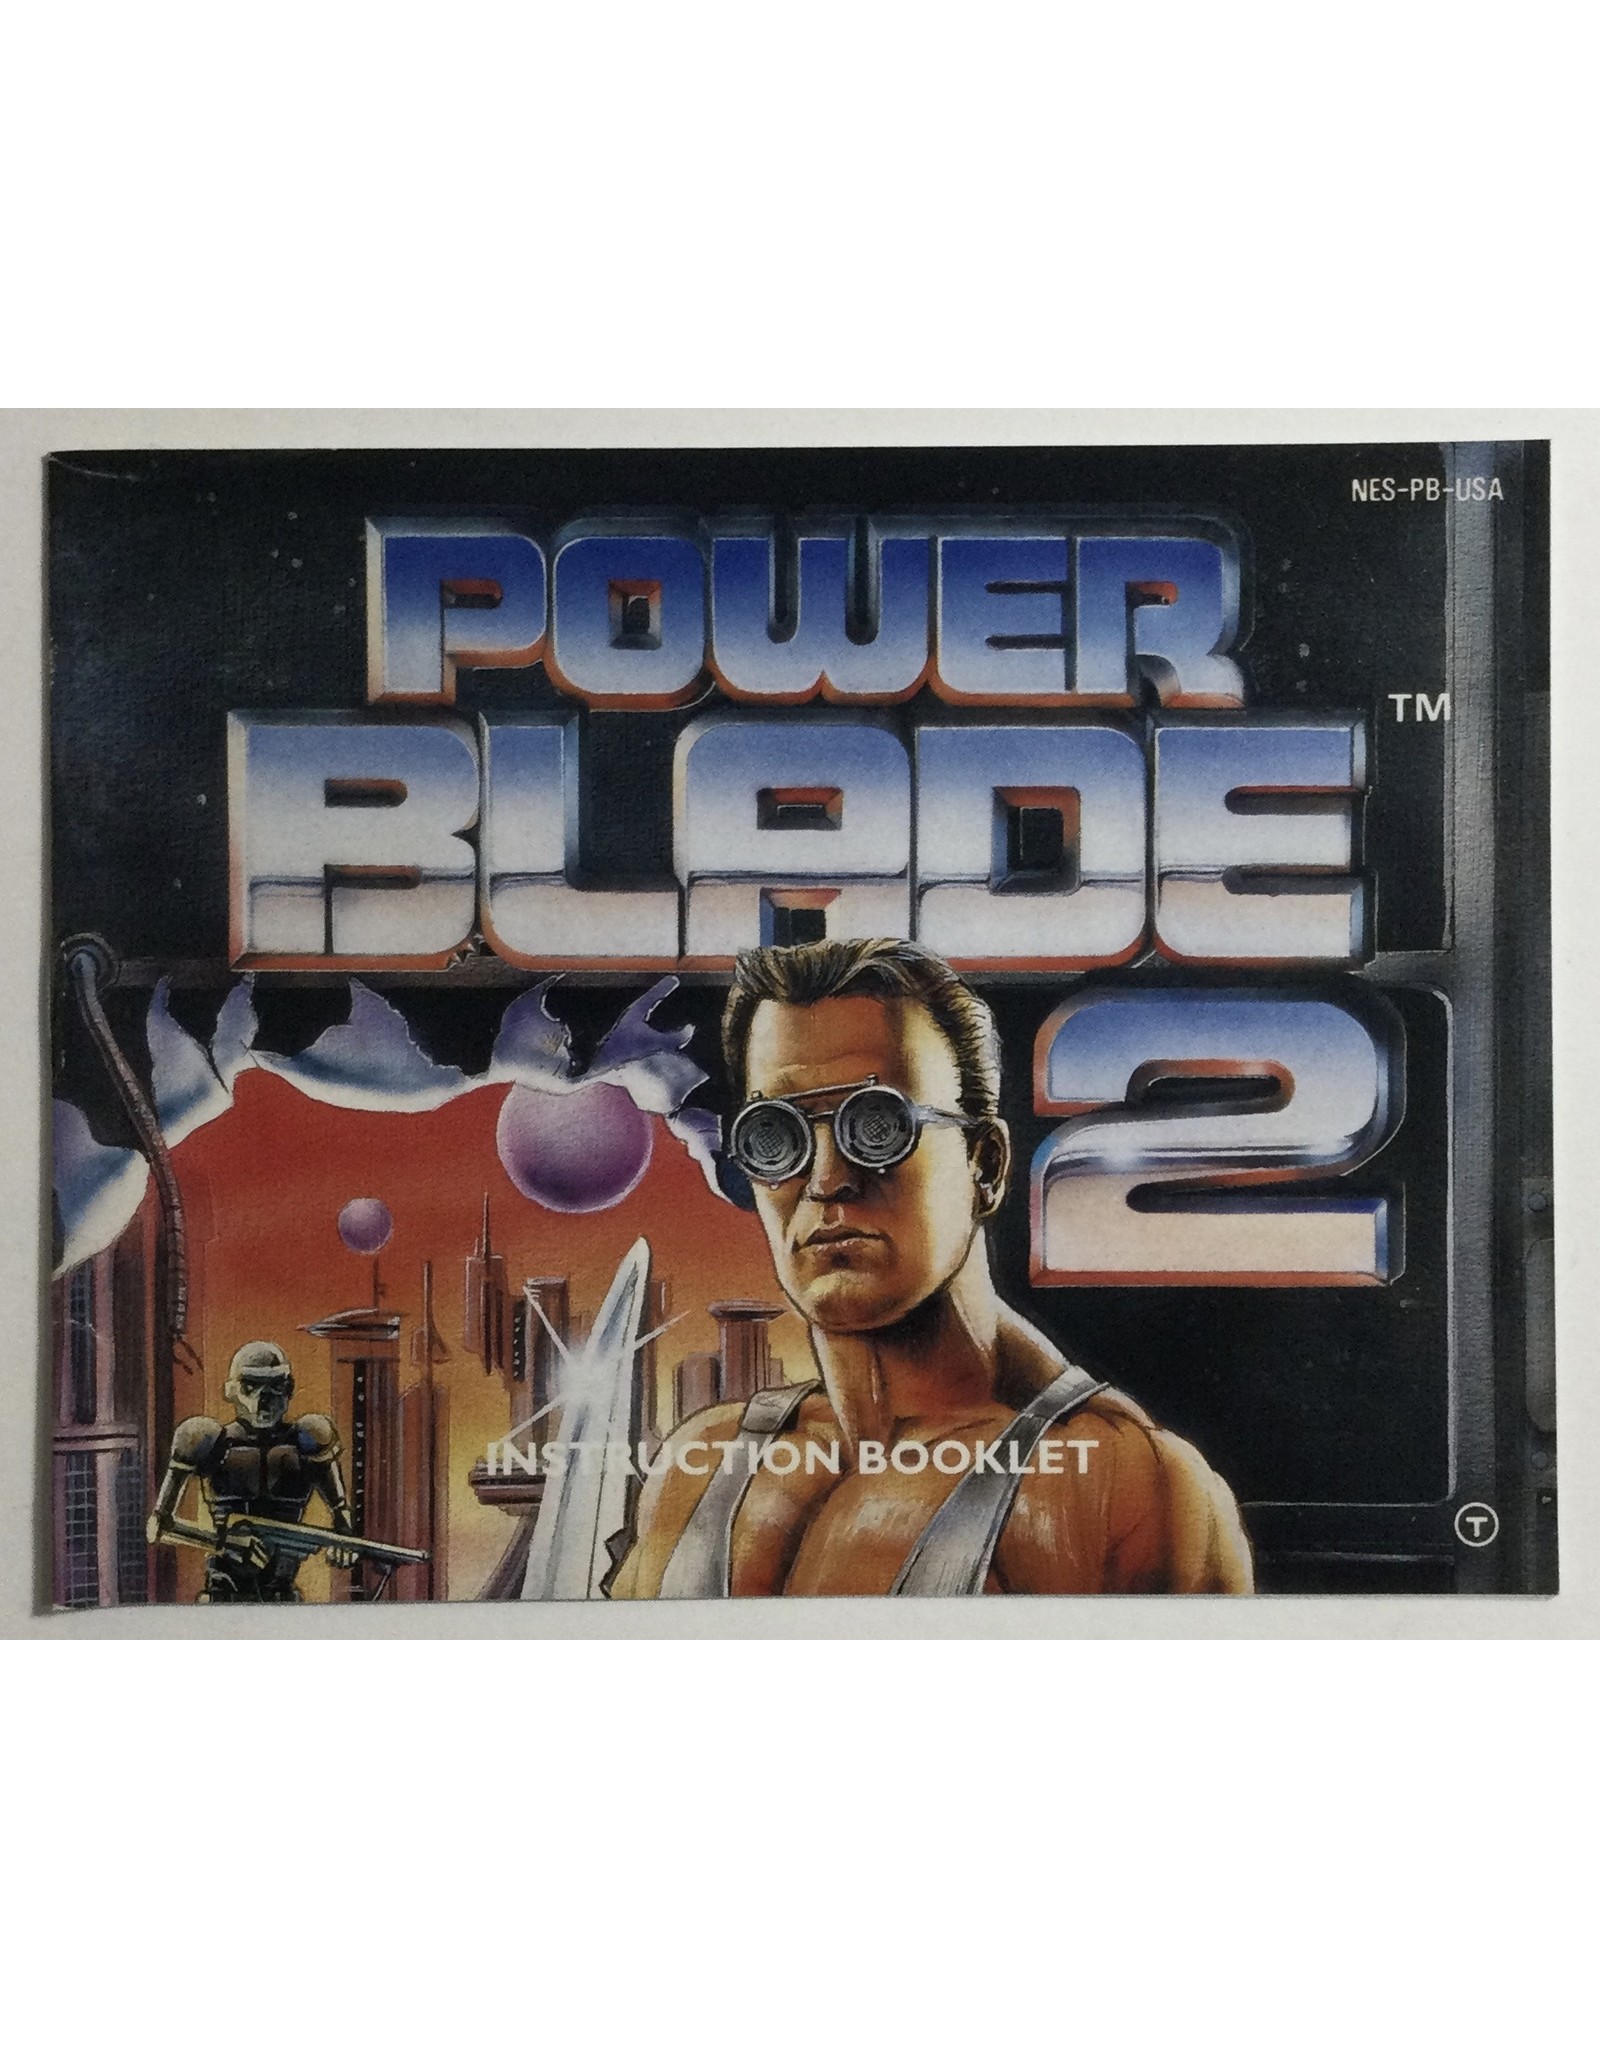 TAITO Power Blade 2 for Nintendo Entertainment System (NES) - CIB